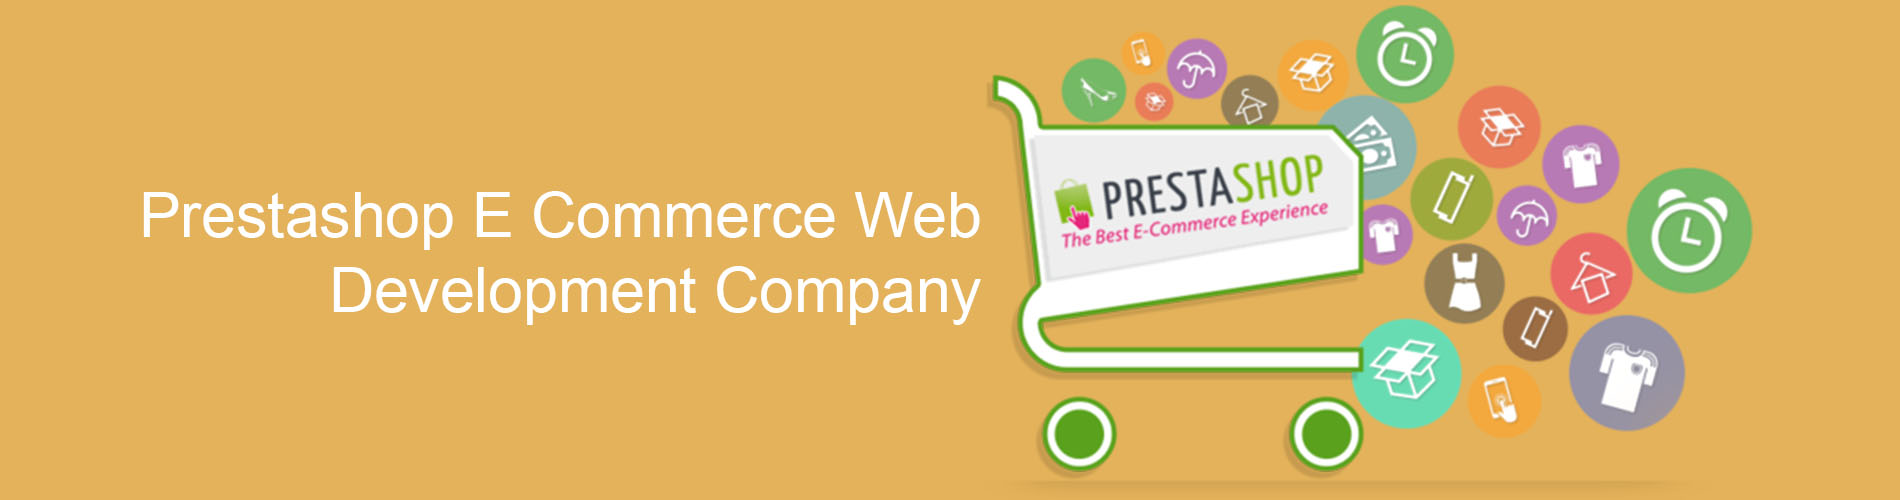 prestashop-e-commerce-web-development-company